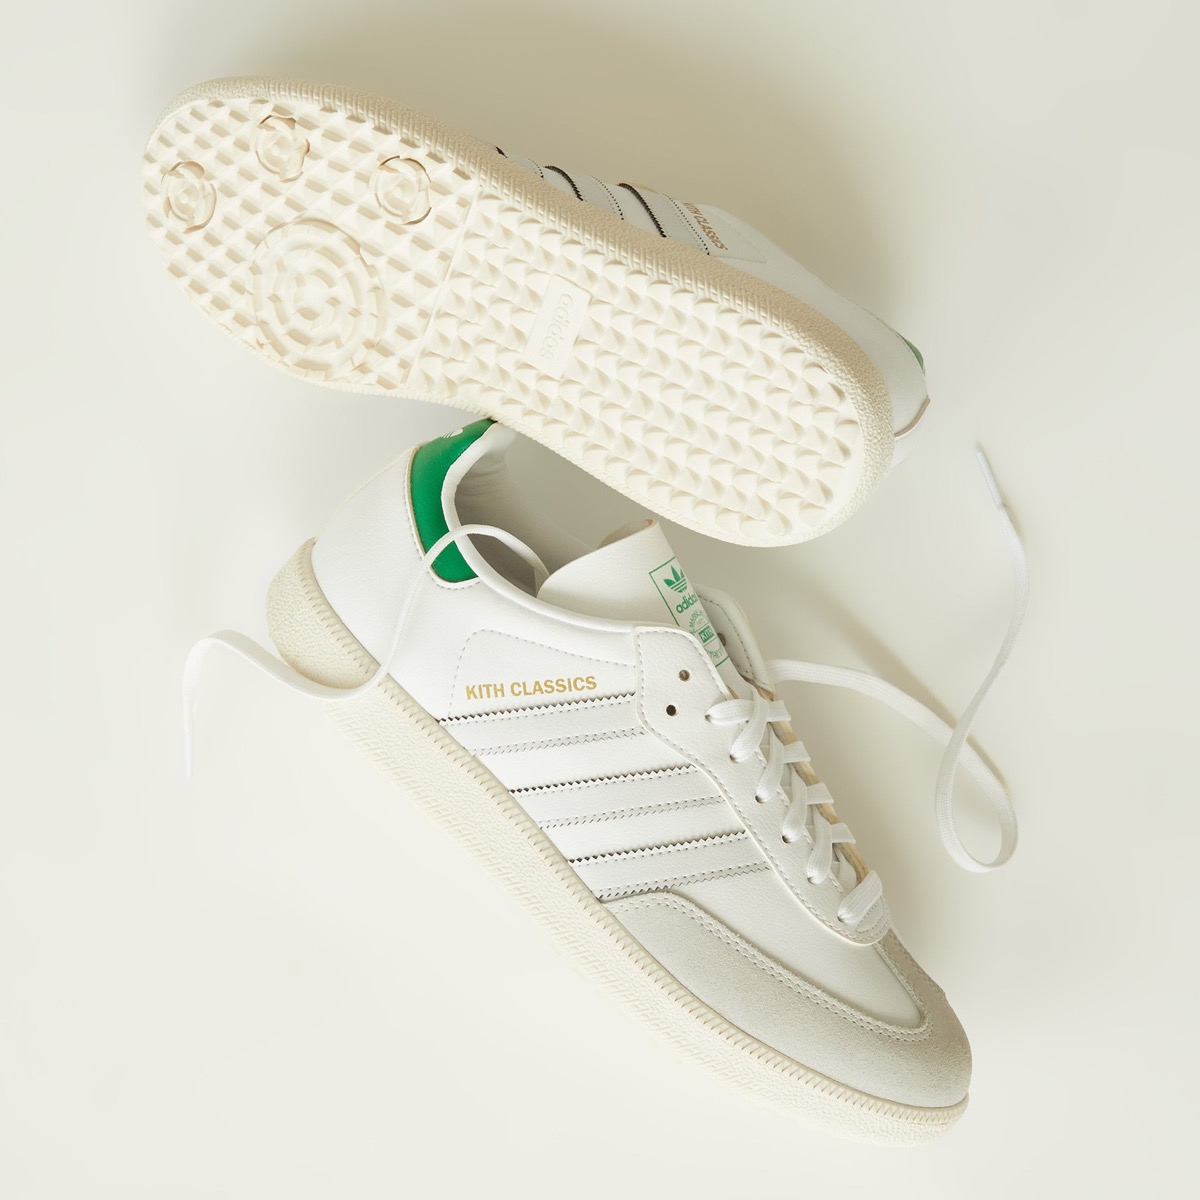 Kith Classics for adidas 『SAMBA GOLF』が国内8月7日より発売予定 ...